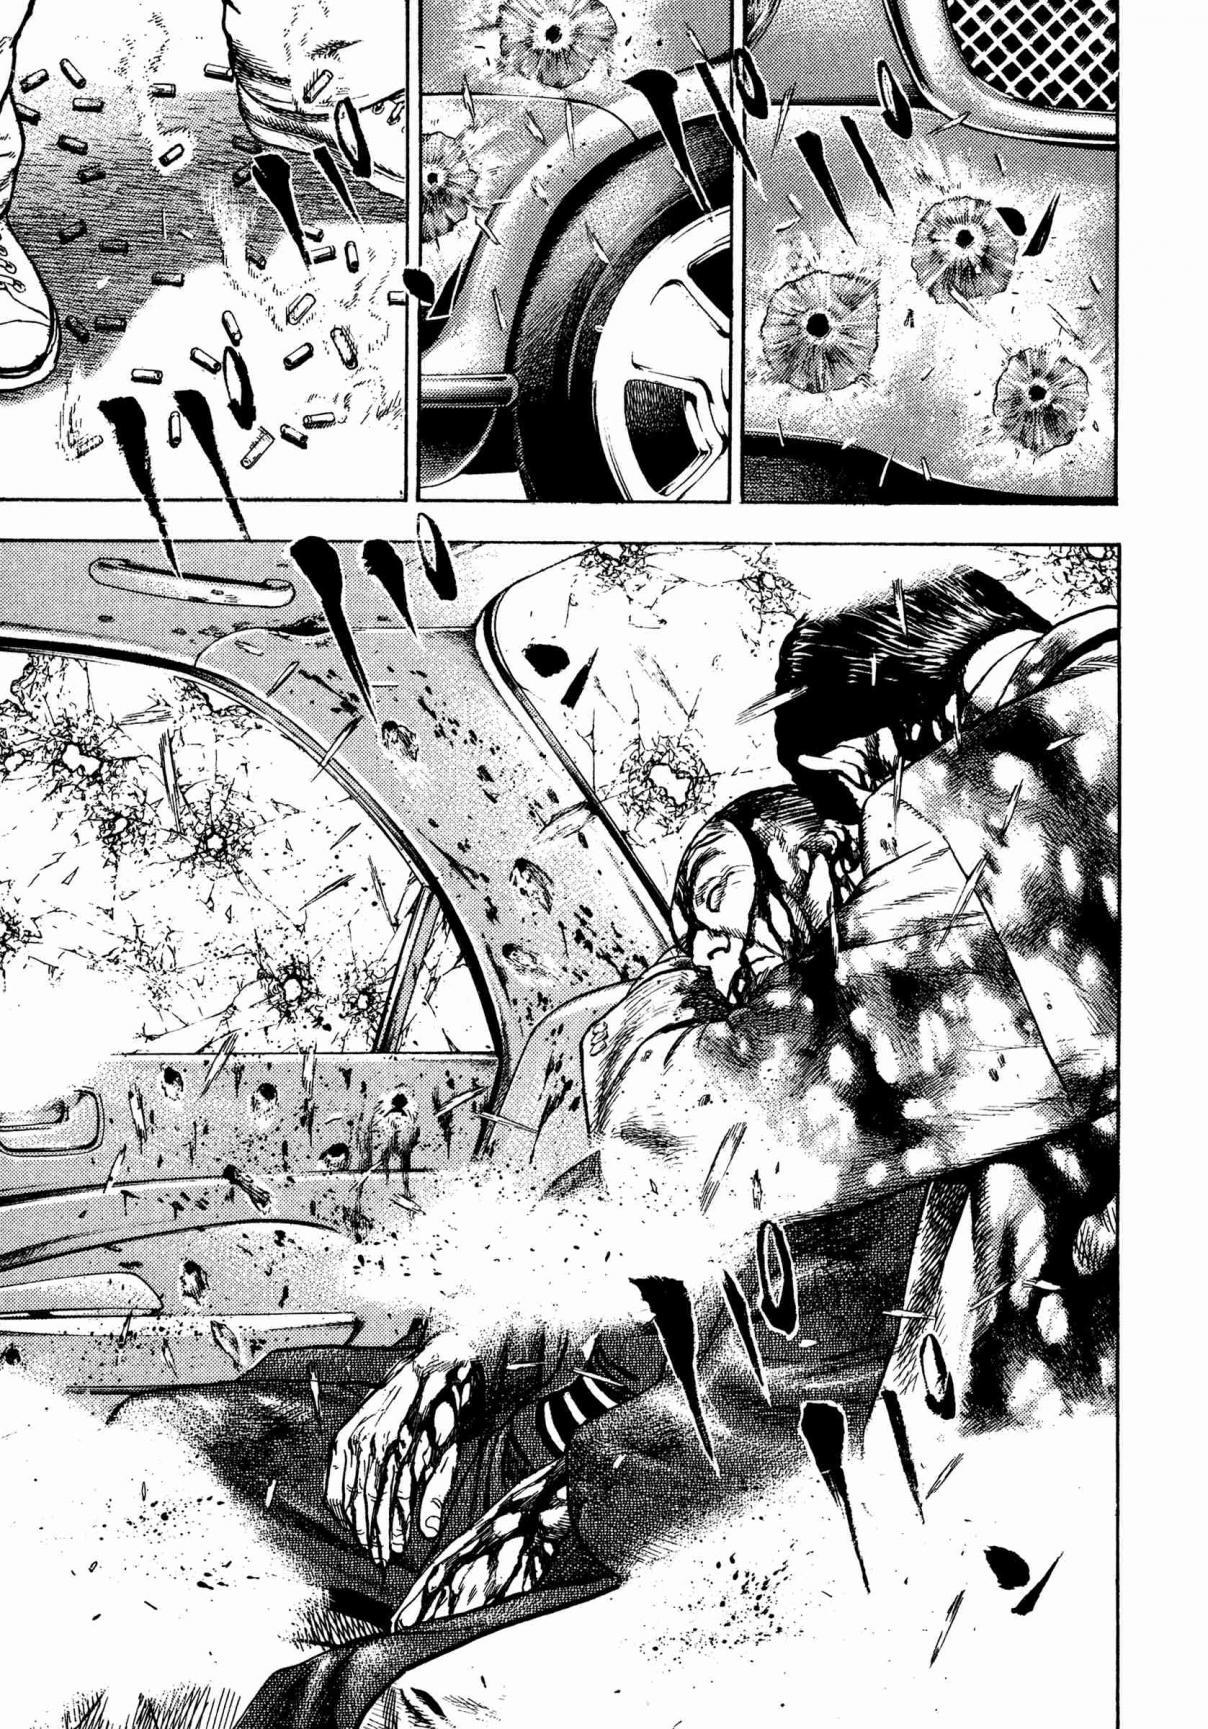 Kizu Darake no Jinsei Vol. 2 Ch. 7 Sniper